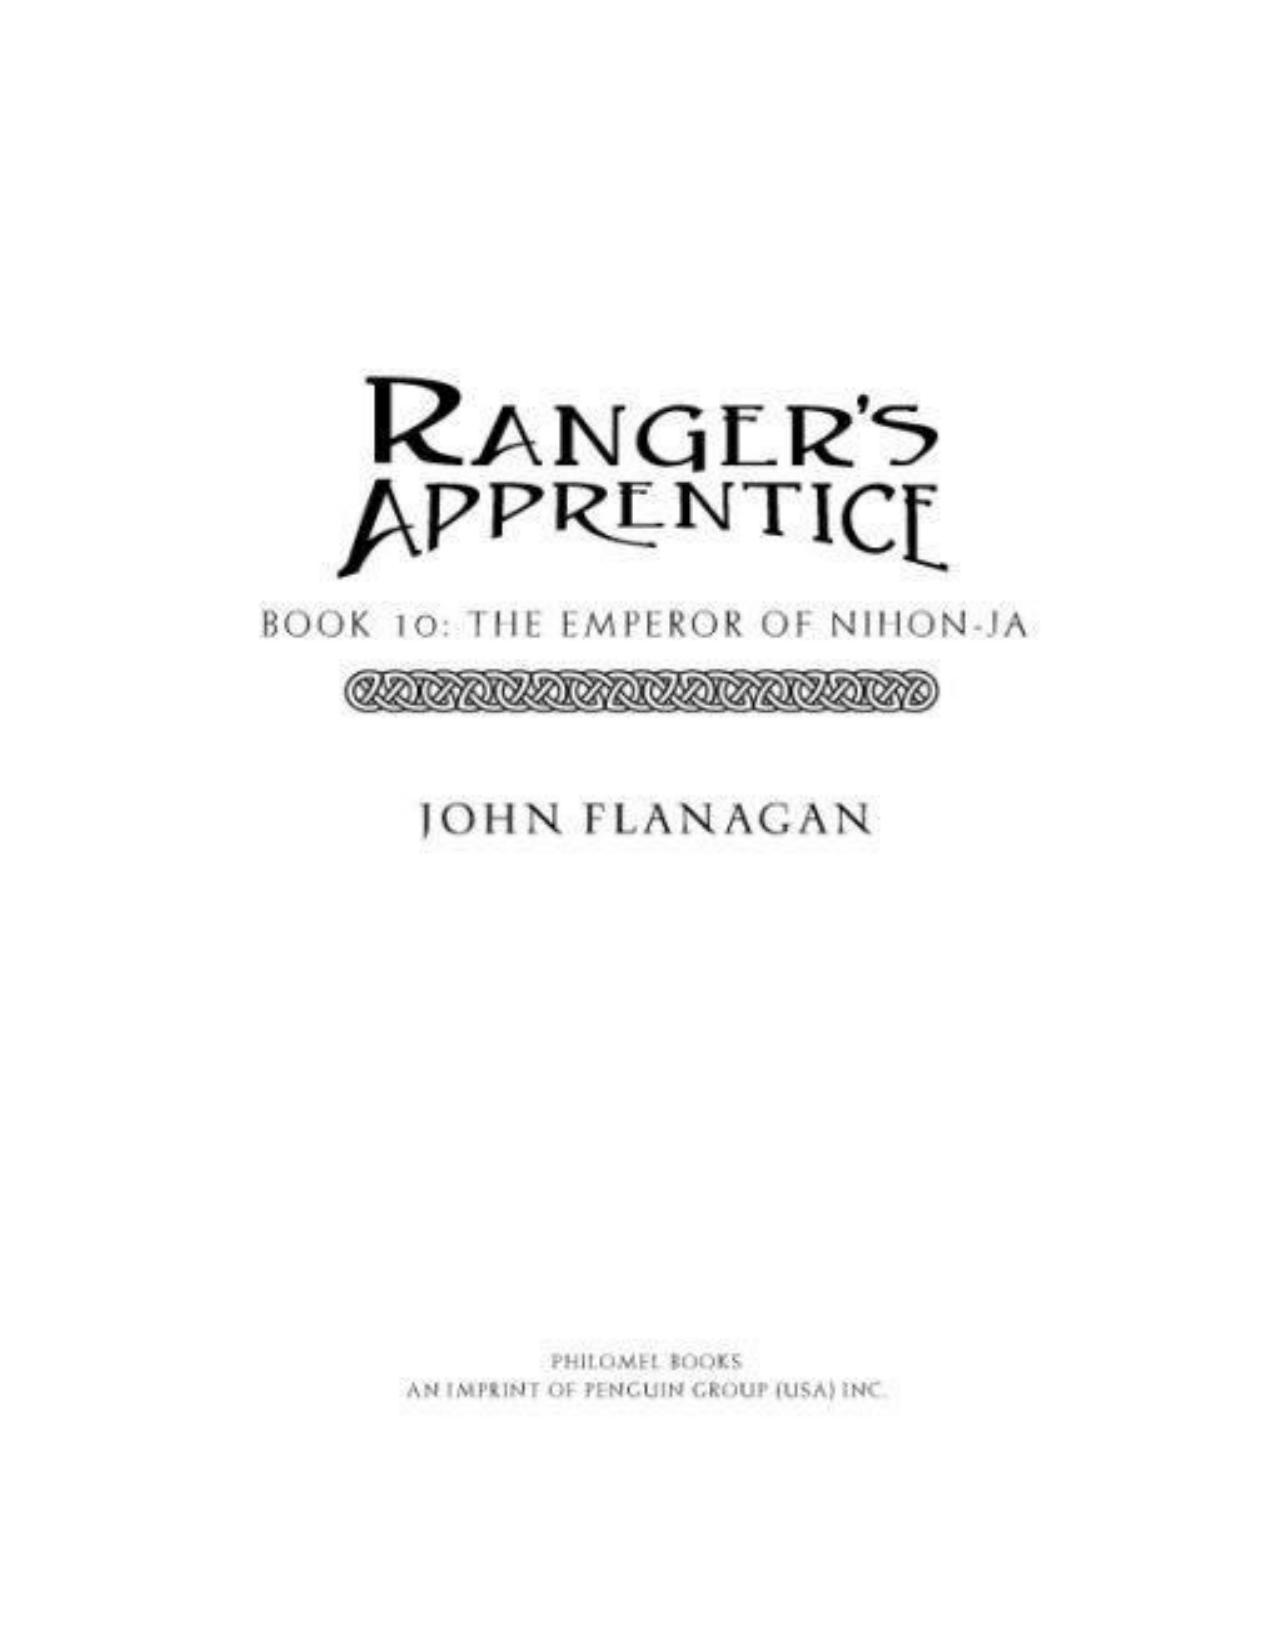 The Ranger's Apprentice, Book 10 by Flanagan John